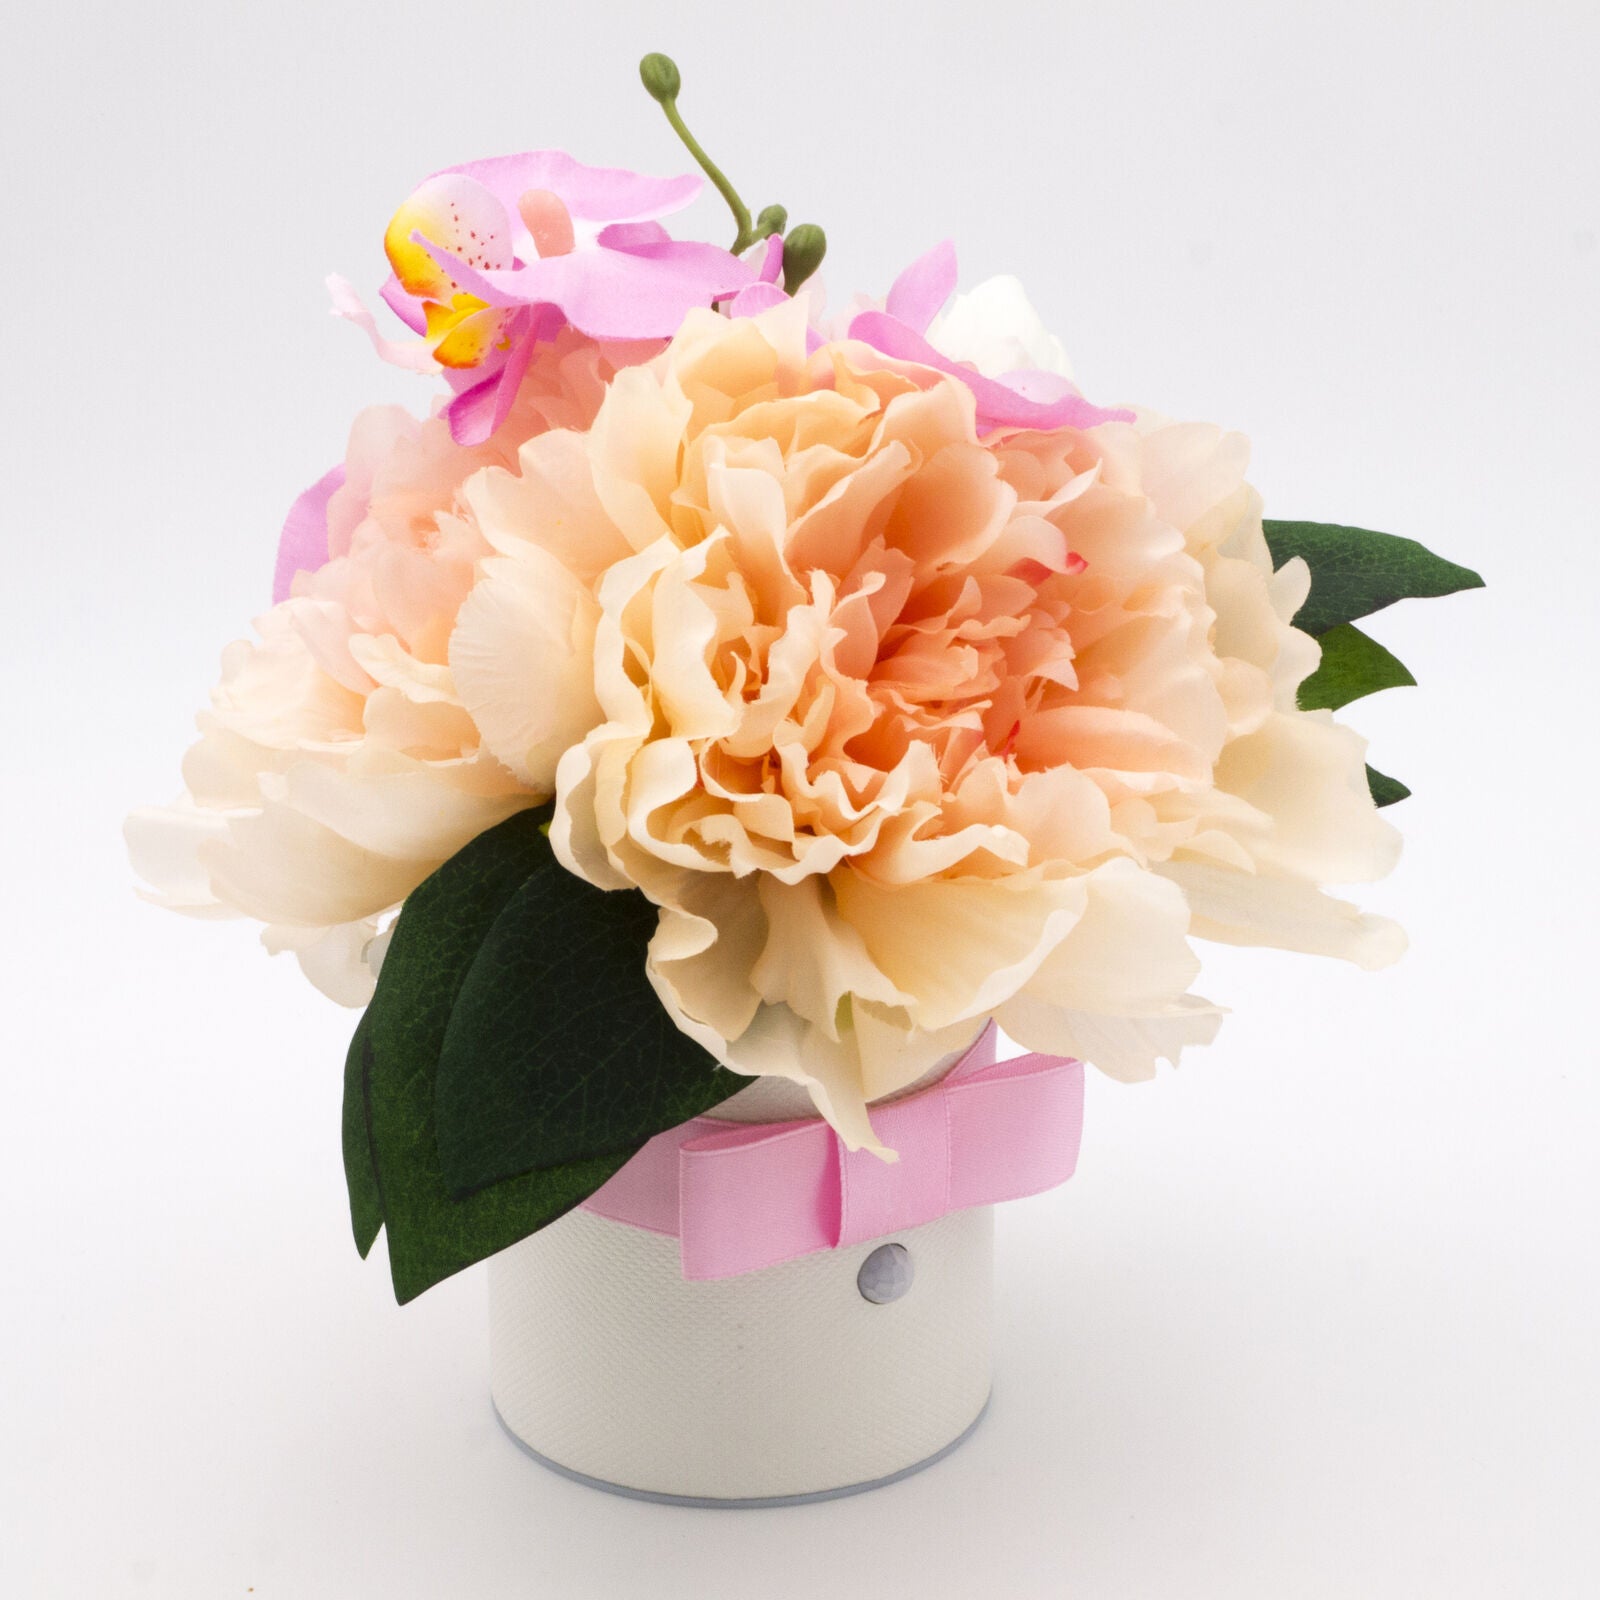 Cirago Romantic Peony Flower Bouquet Table Lamp Motion Sensor Night Light